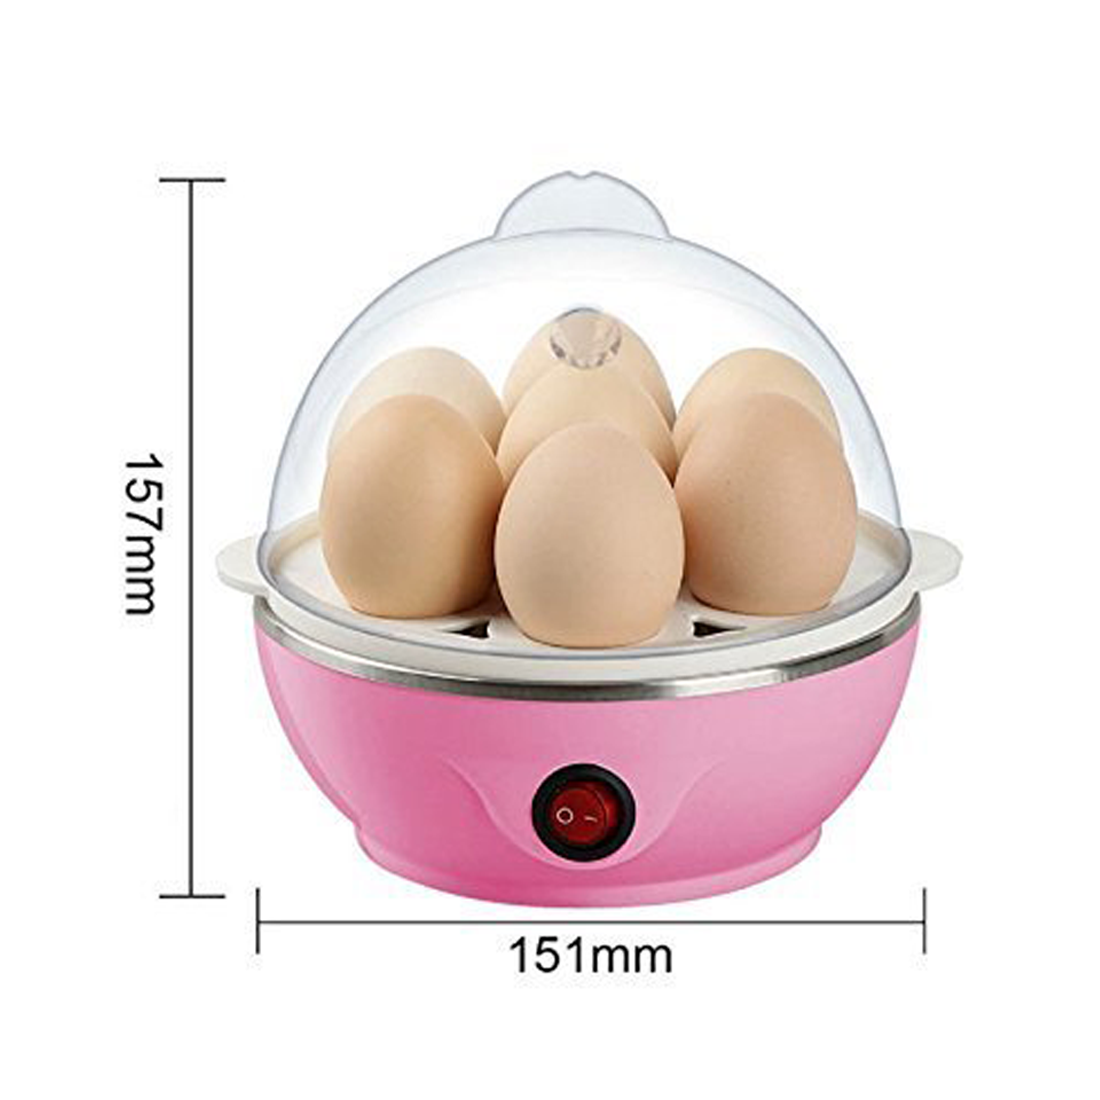 Egg Boiling Machine